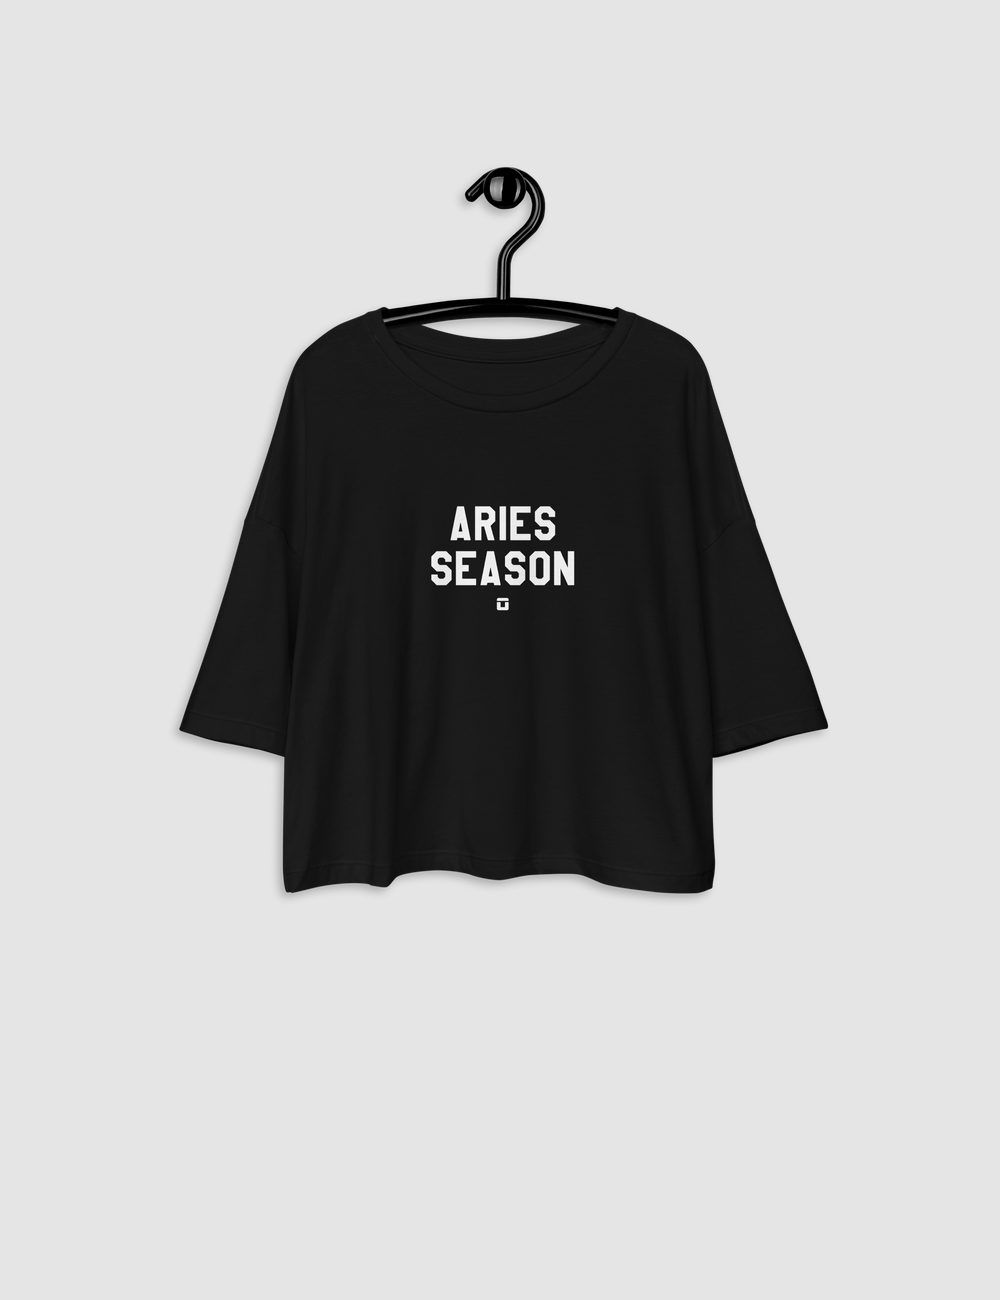 Aries Season | Women's Loose Fit Crop Top T-Shirt OniTakai